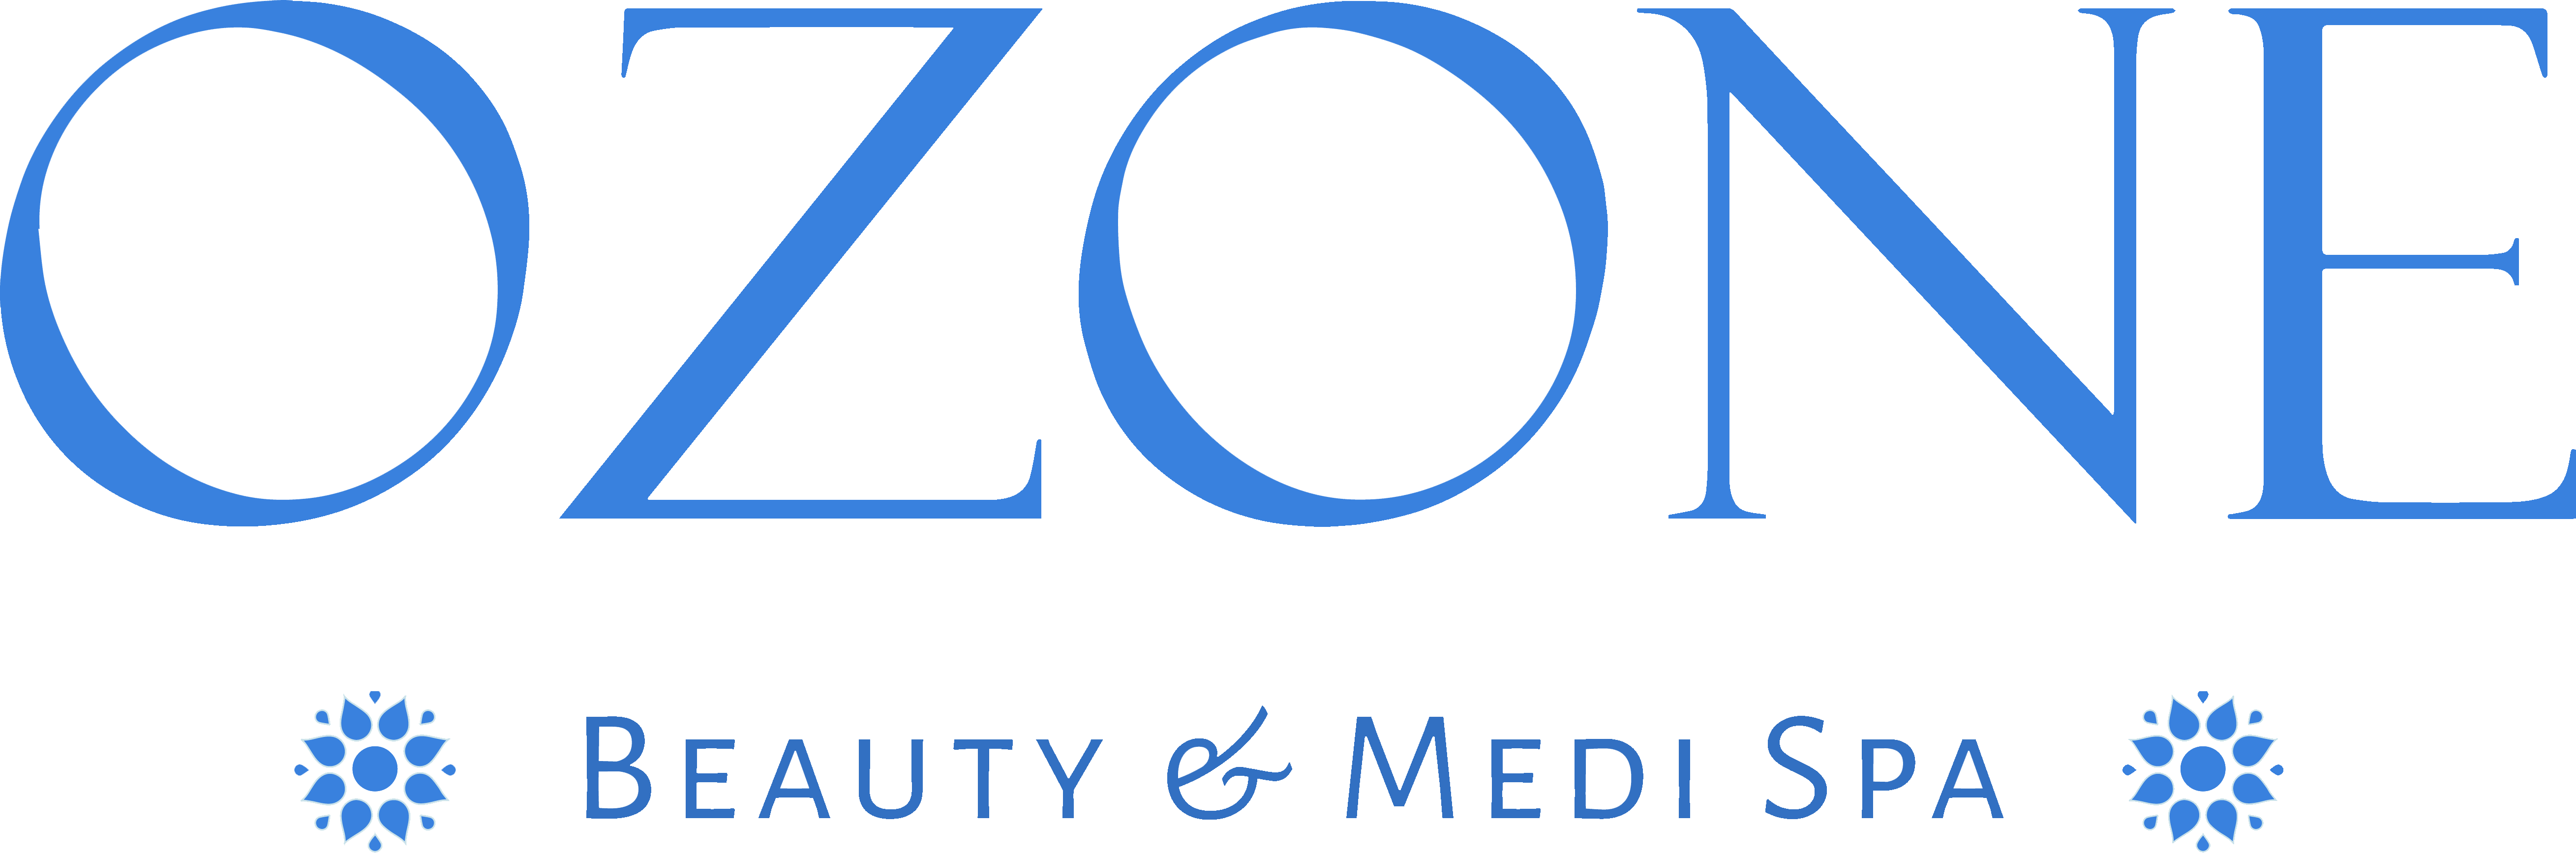 Ozone Beauty & Medi Spa Logo (BLUE)